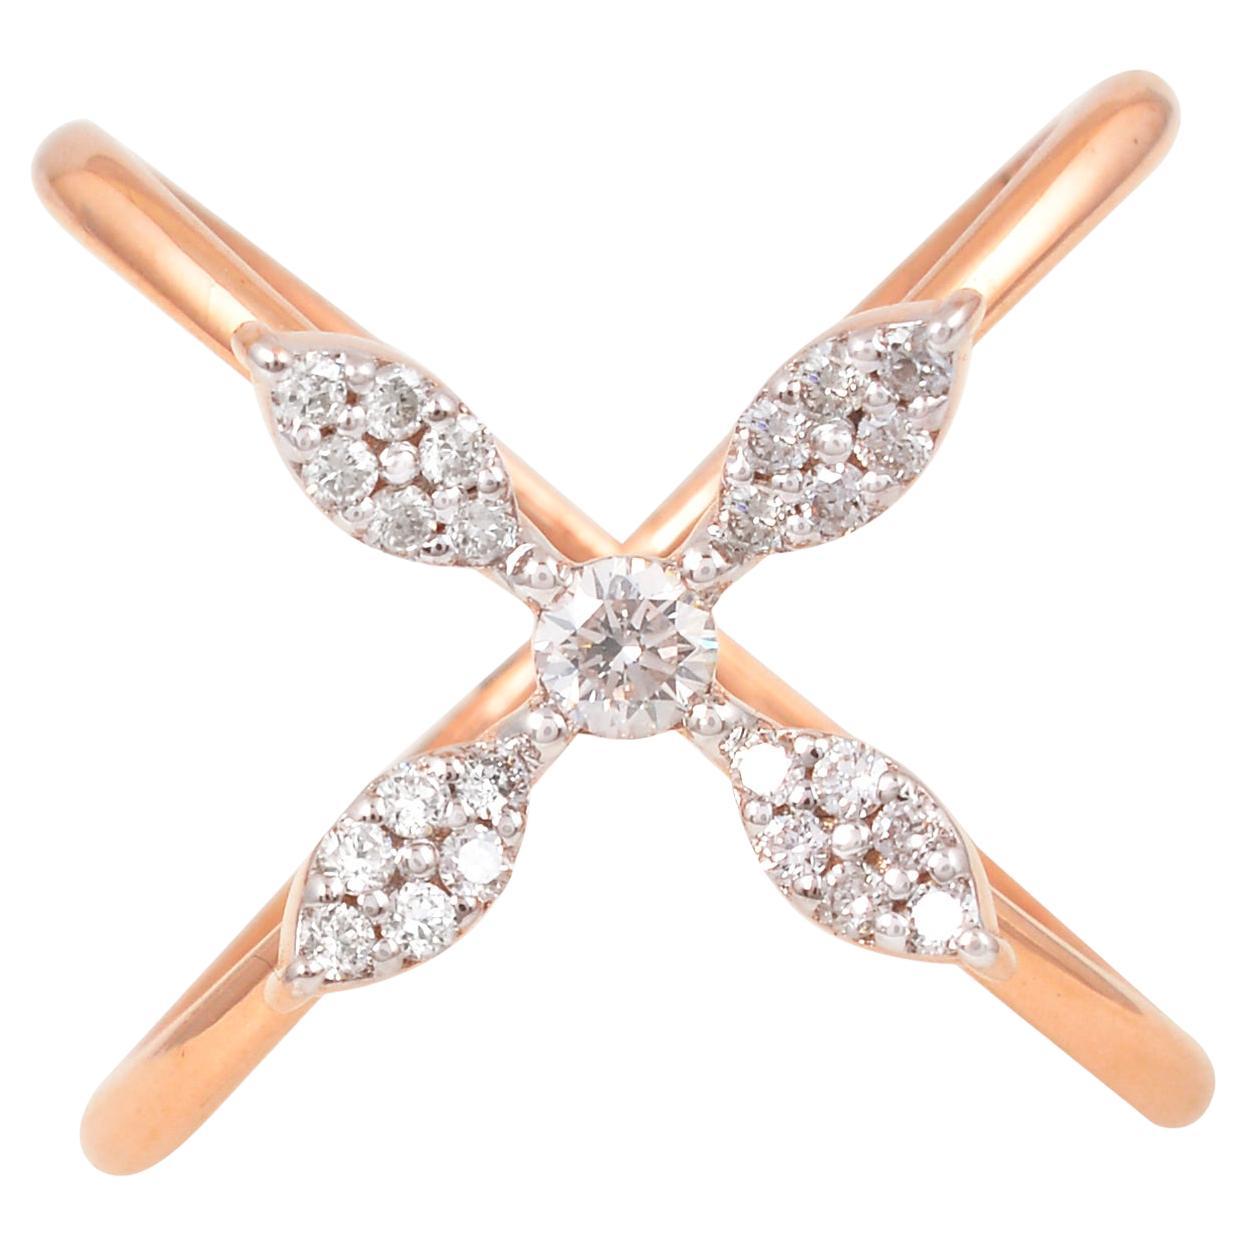 0.3 Carat SI Clarity HI Color Diamond Pave Cross Ring 18 Karat Rose Gold Jewelry